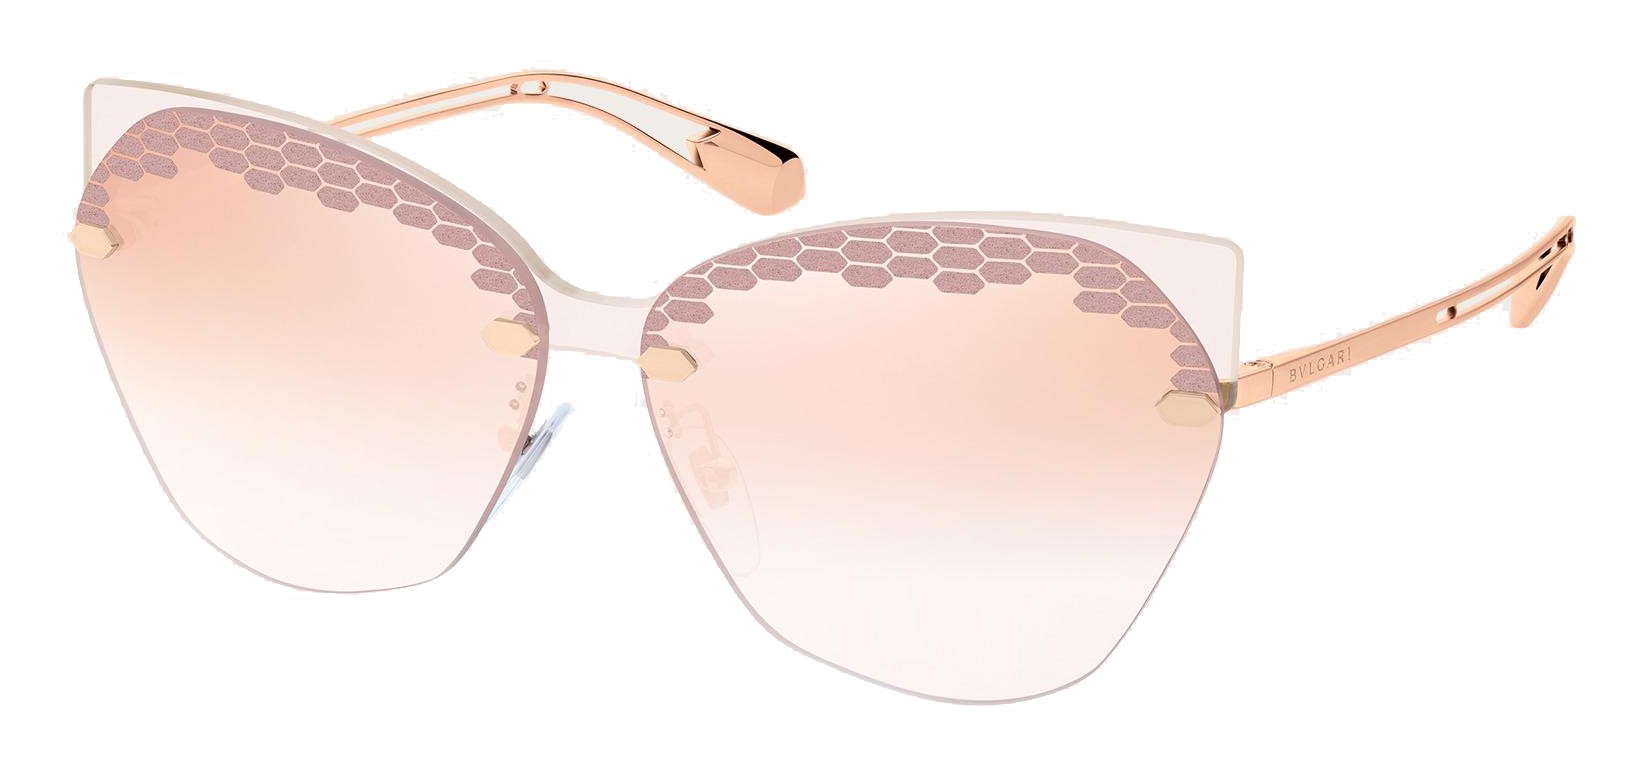 bvlgari new collection sunglasses